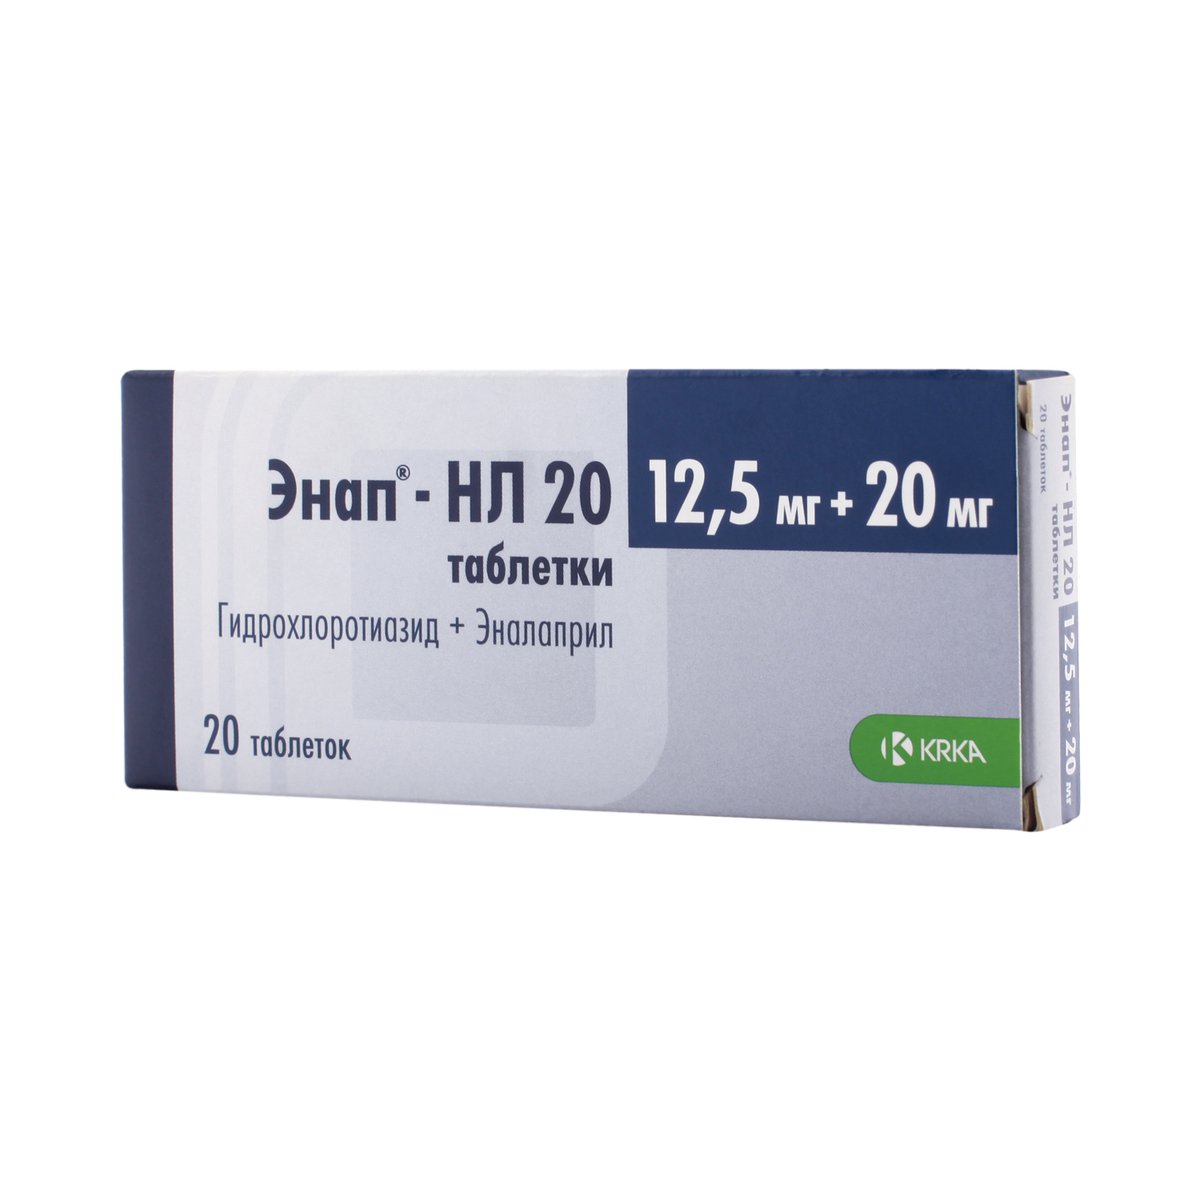 Энап-НЛ 20 (таблетки, 20 шт, 12,5+20 мг) - цена,  онлайн  .